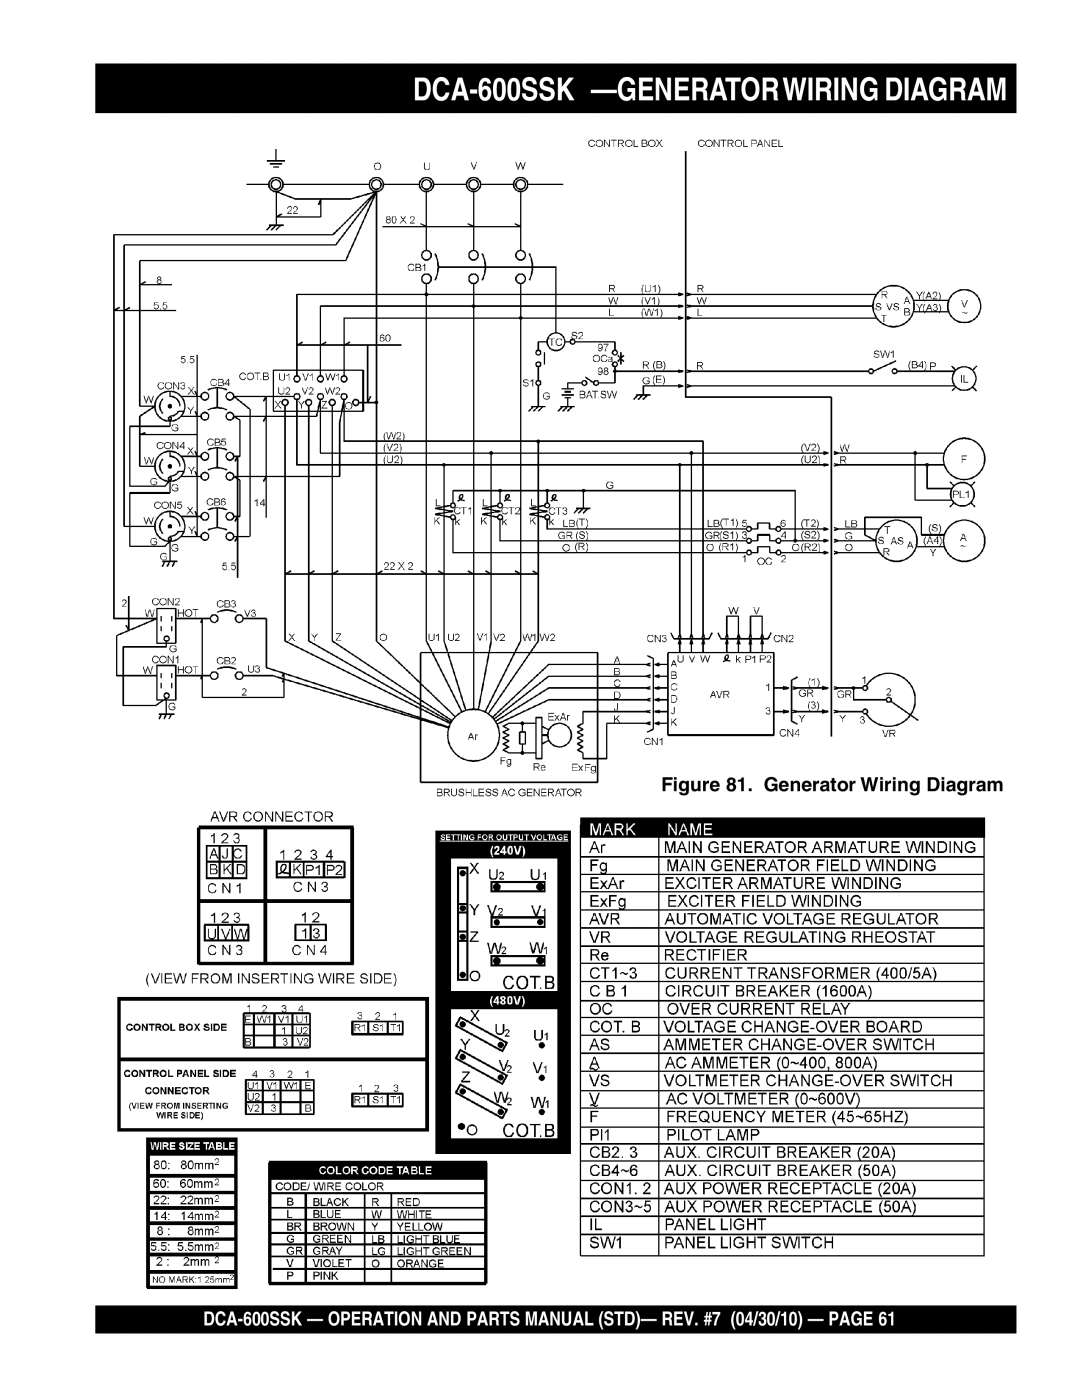 Multiquip operation manual DCA-600SSK -GENERATORWIRING DIAGRAM, Generator Wiring Diagram 